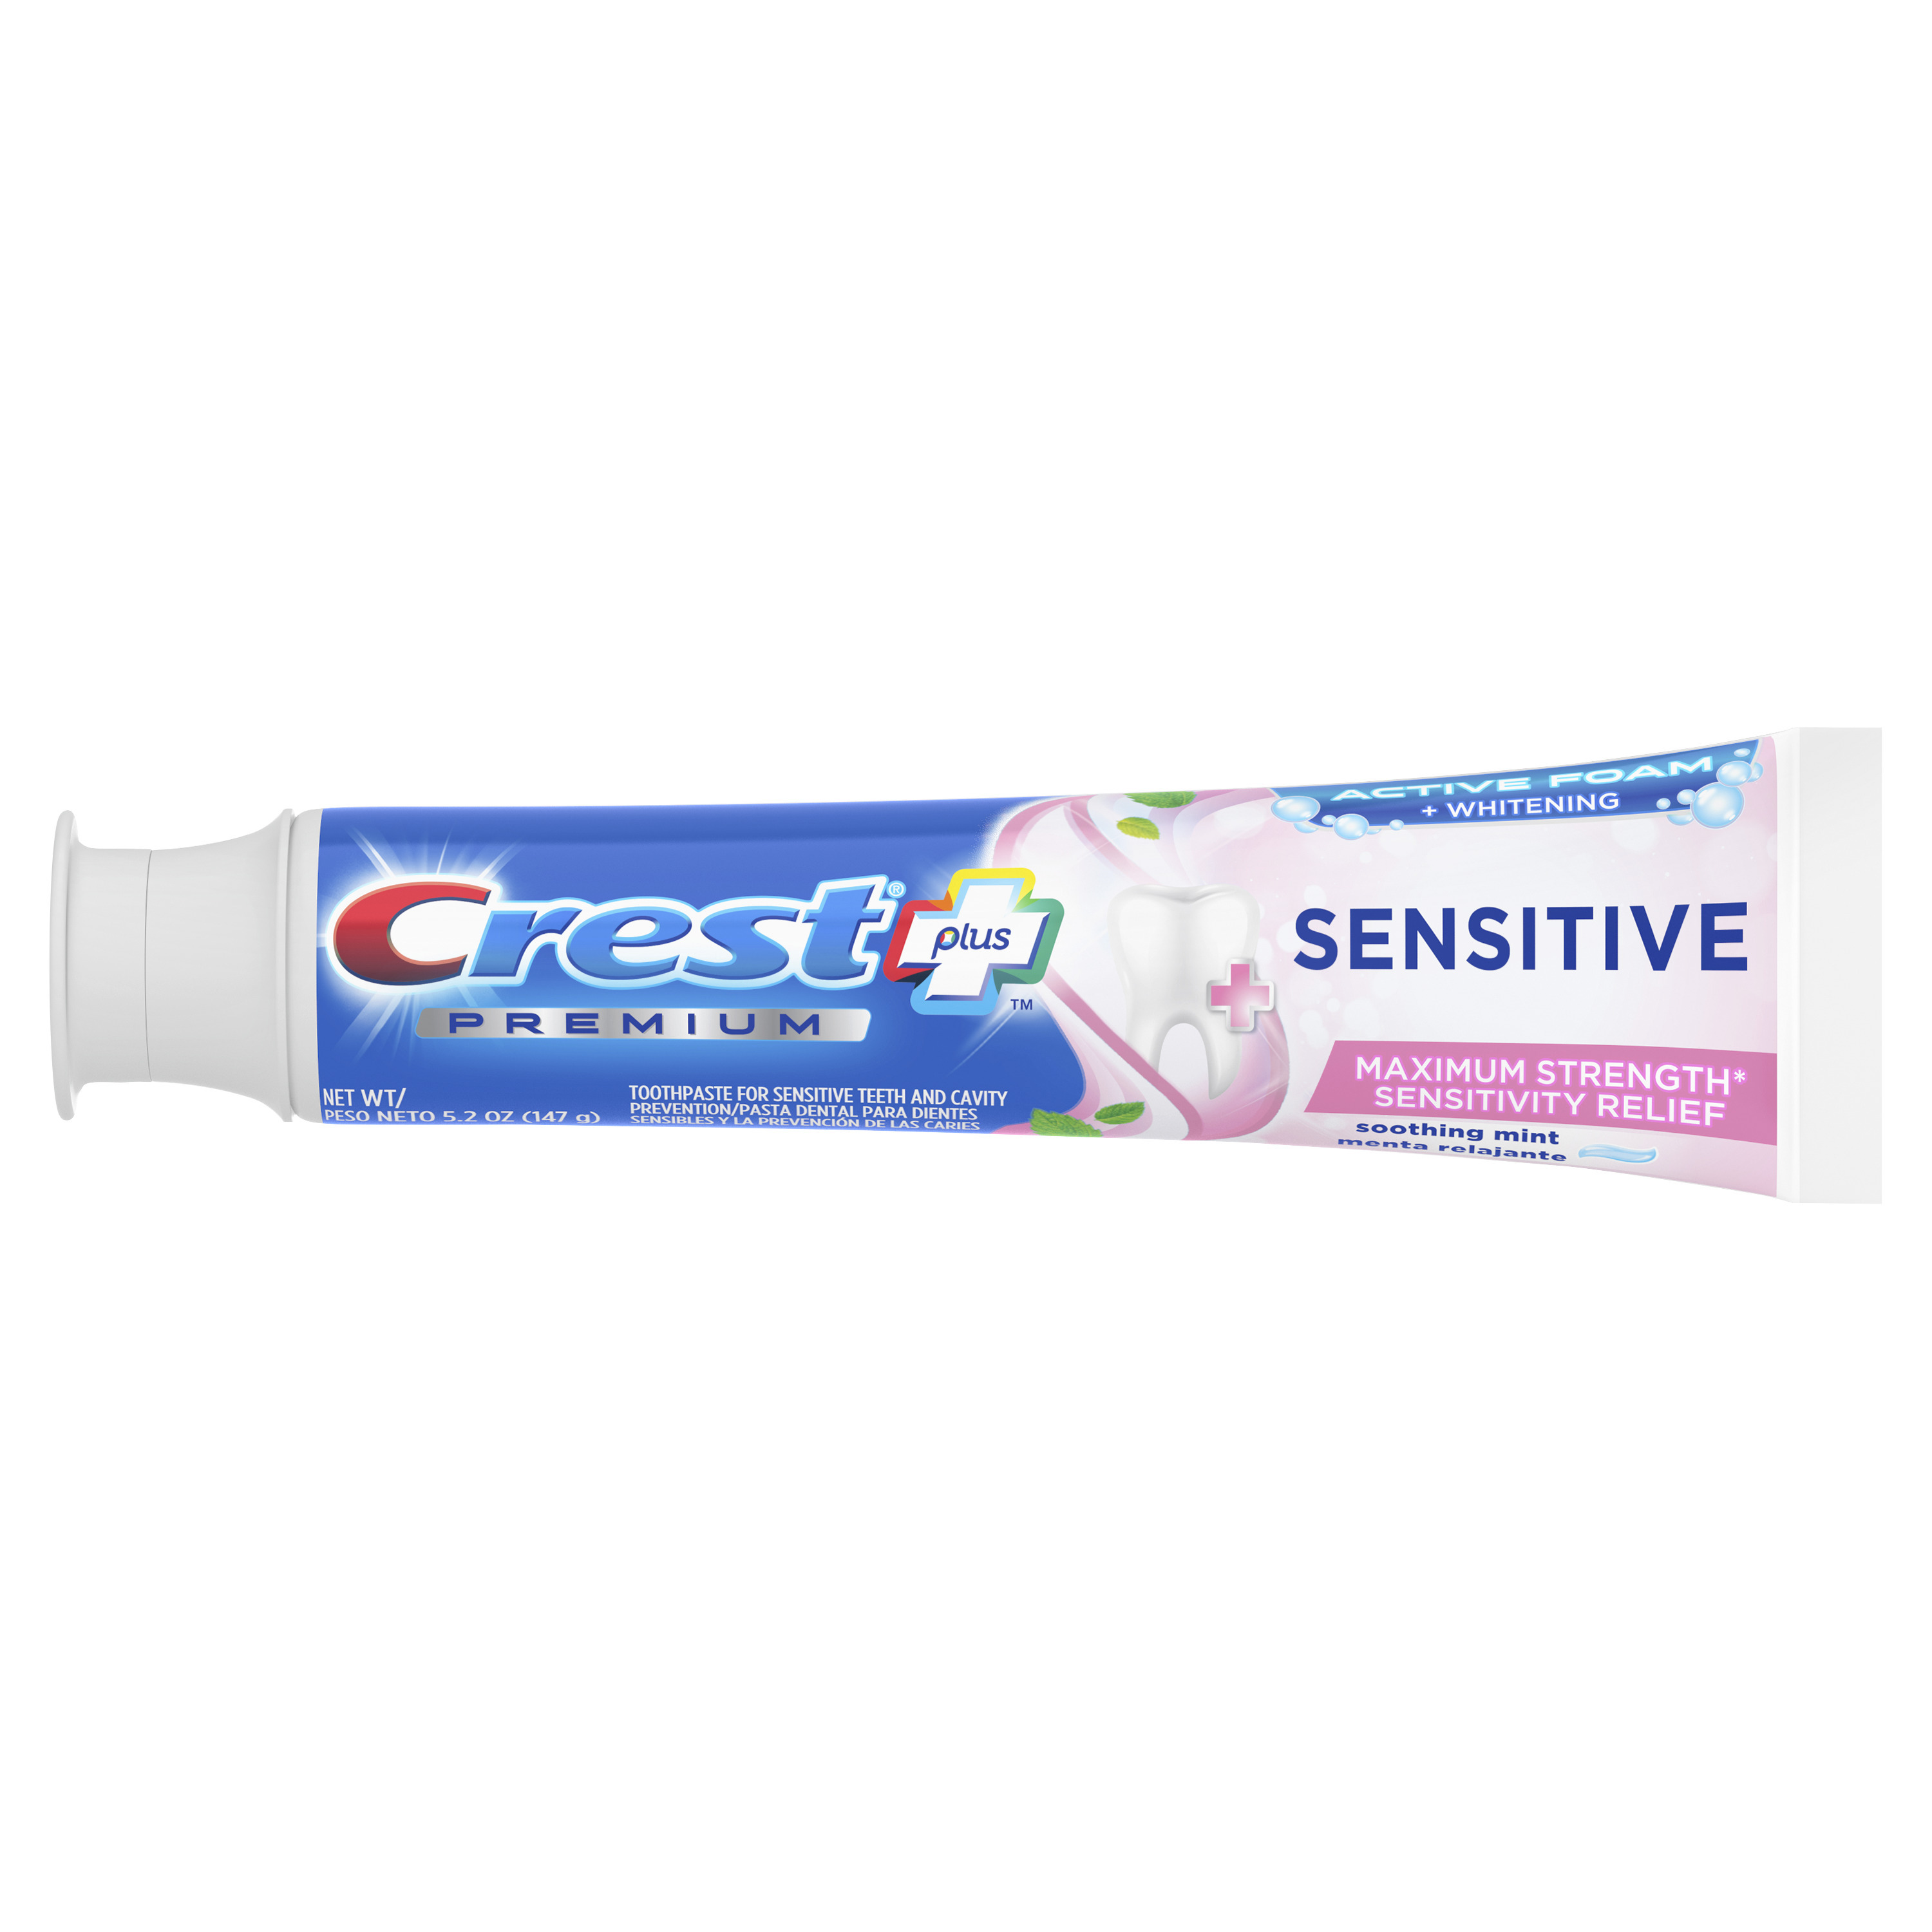 Crest Premium Plus Sensitive Toothpaste, Soothing Mint Flavor, 5.2 oz - image 5 of 5